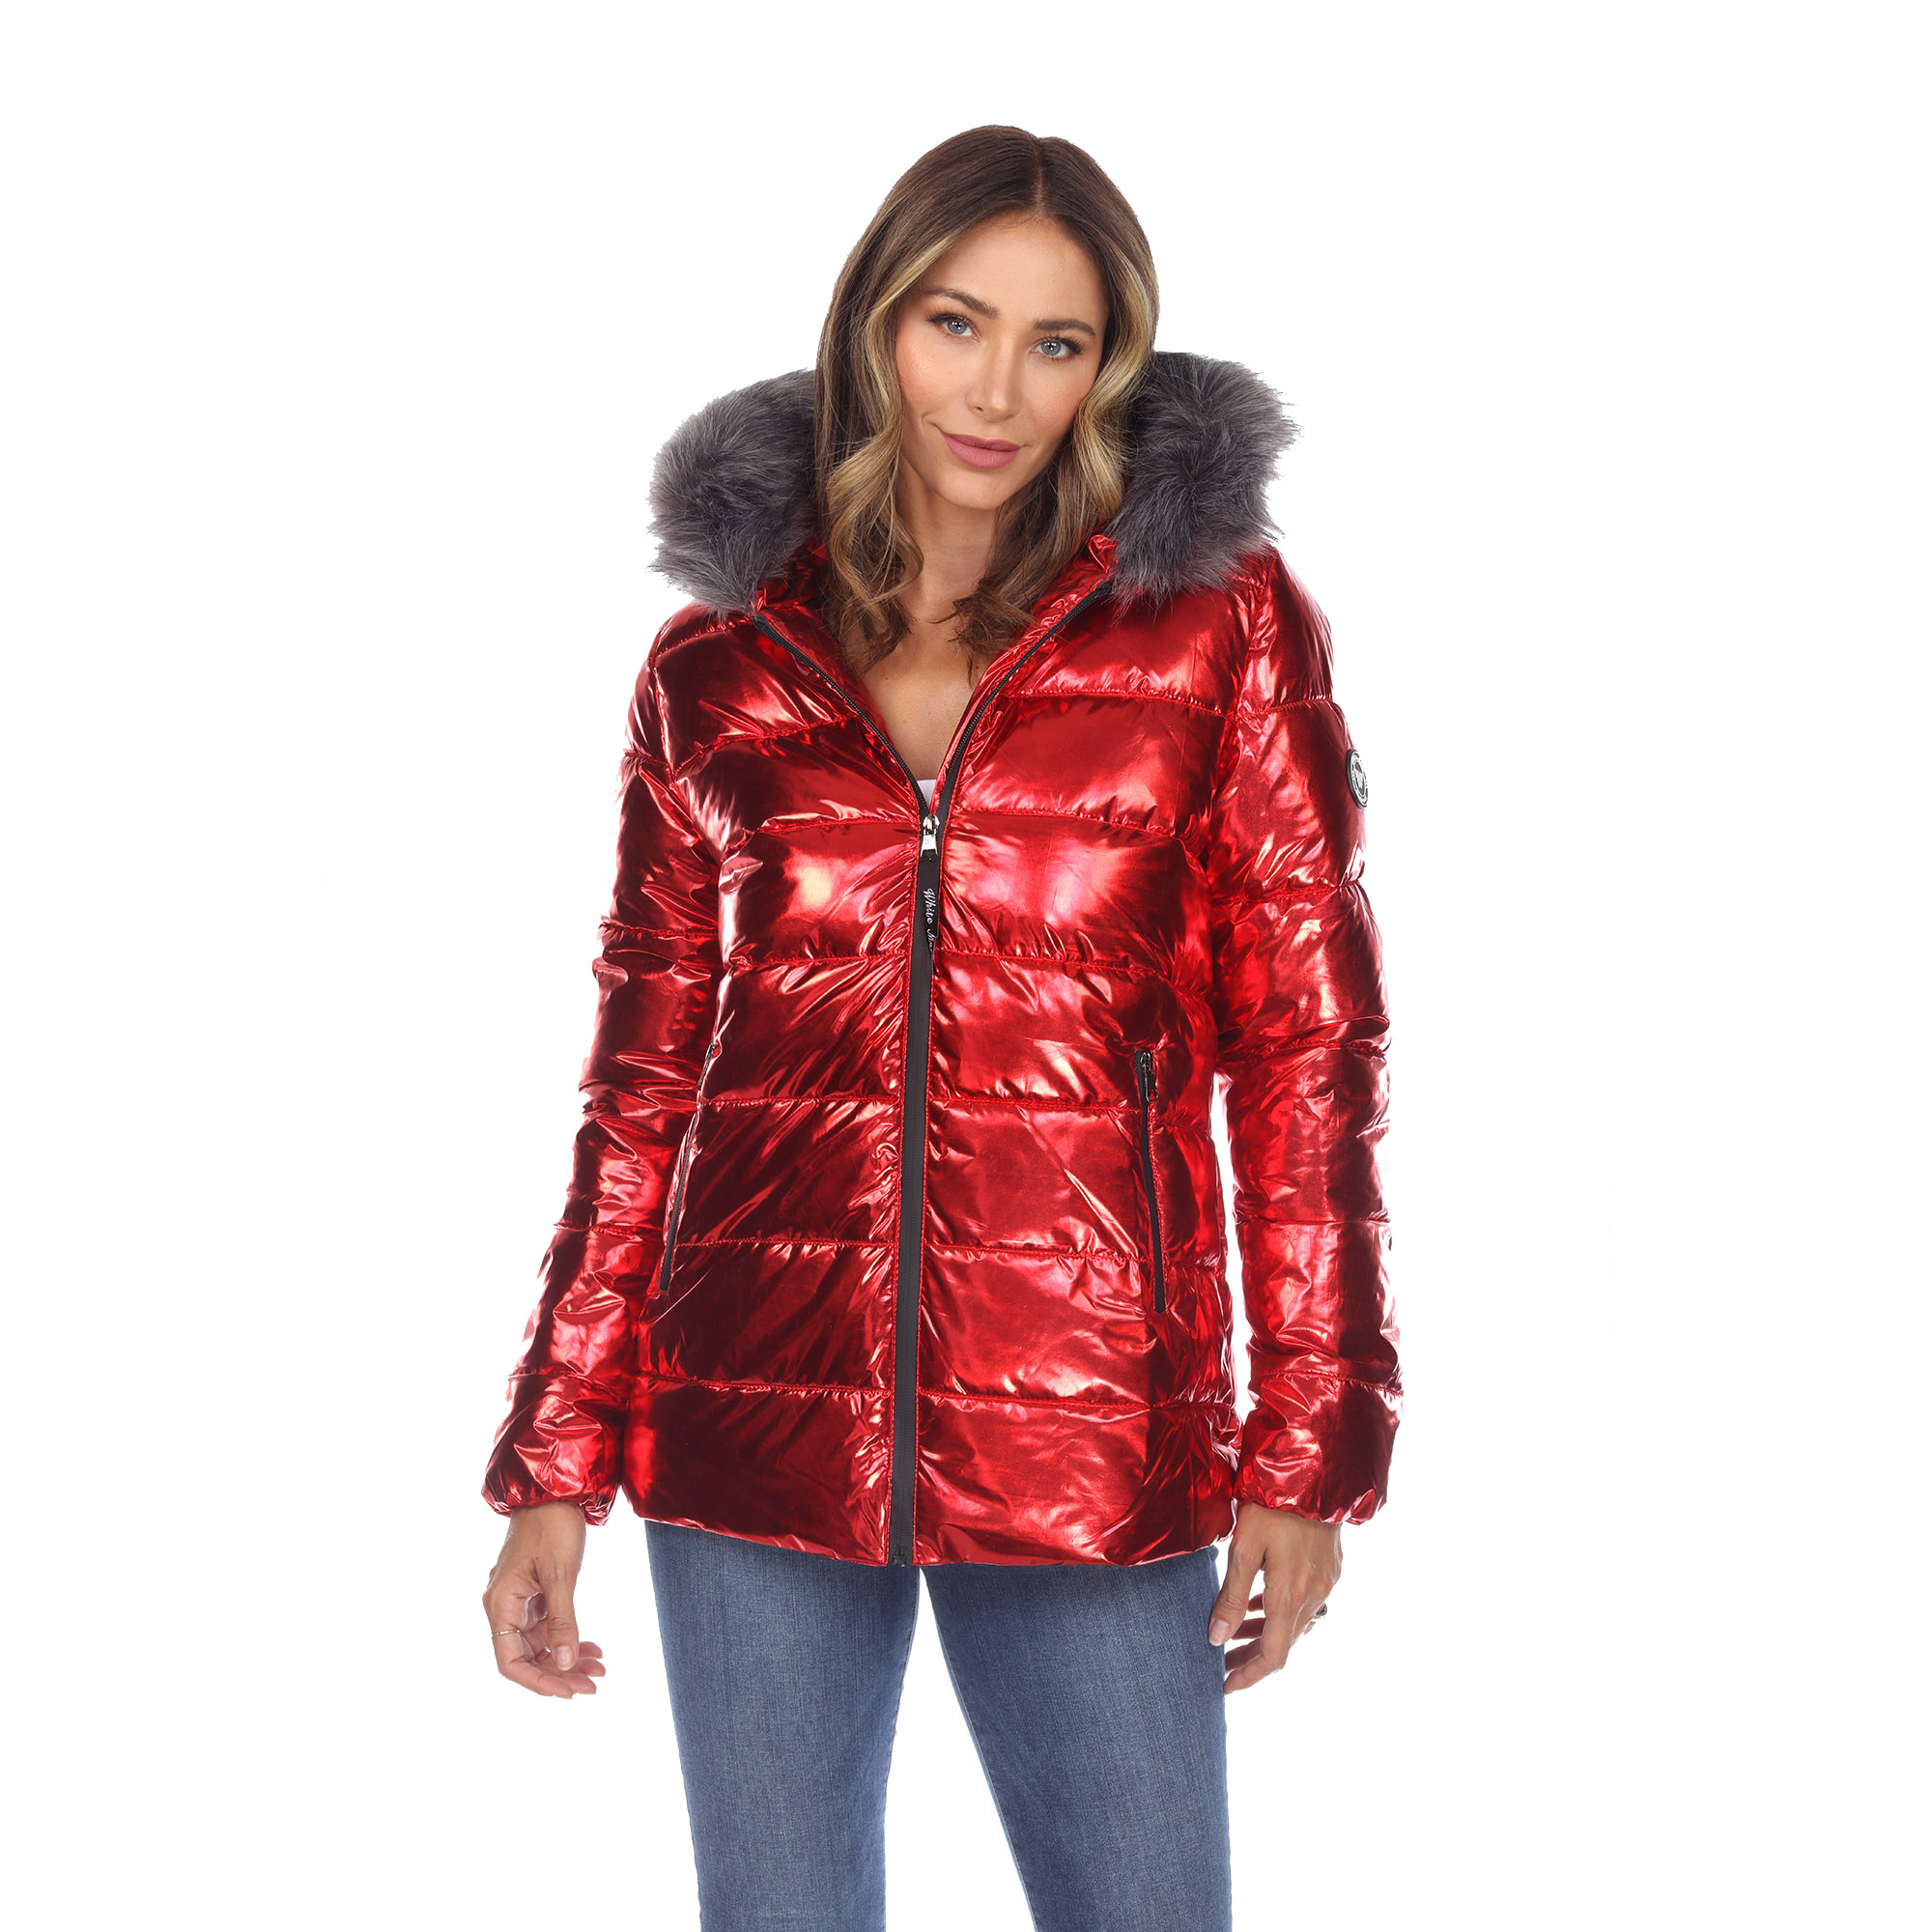 White Mark Womenâs Metallic Puffer Coat With Hoodie - Red, 3X